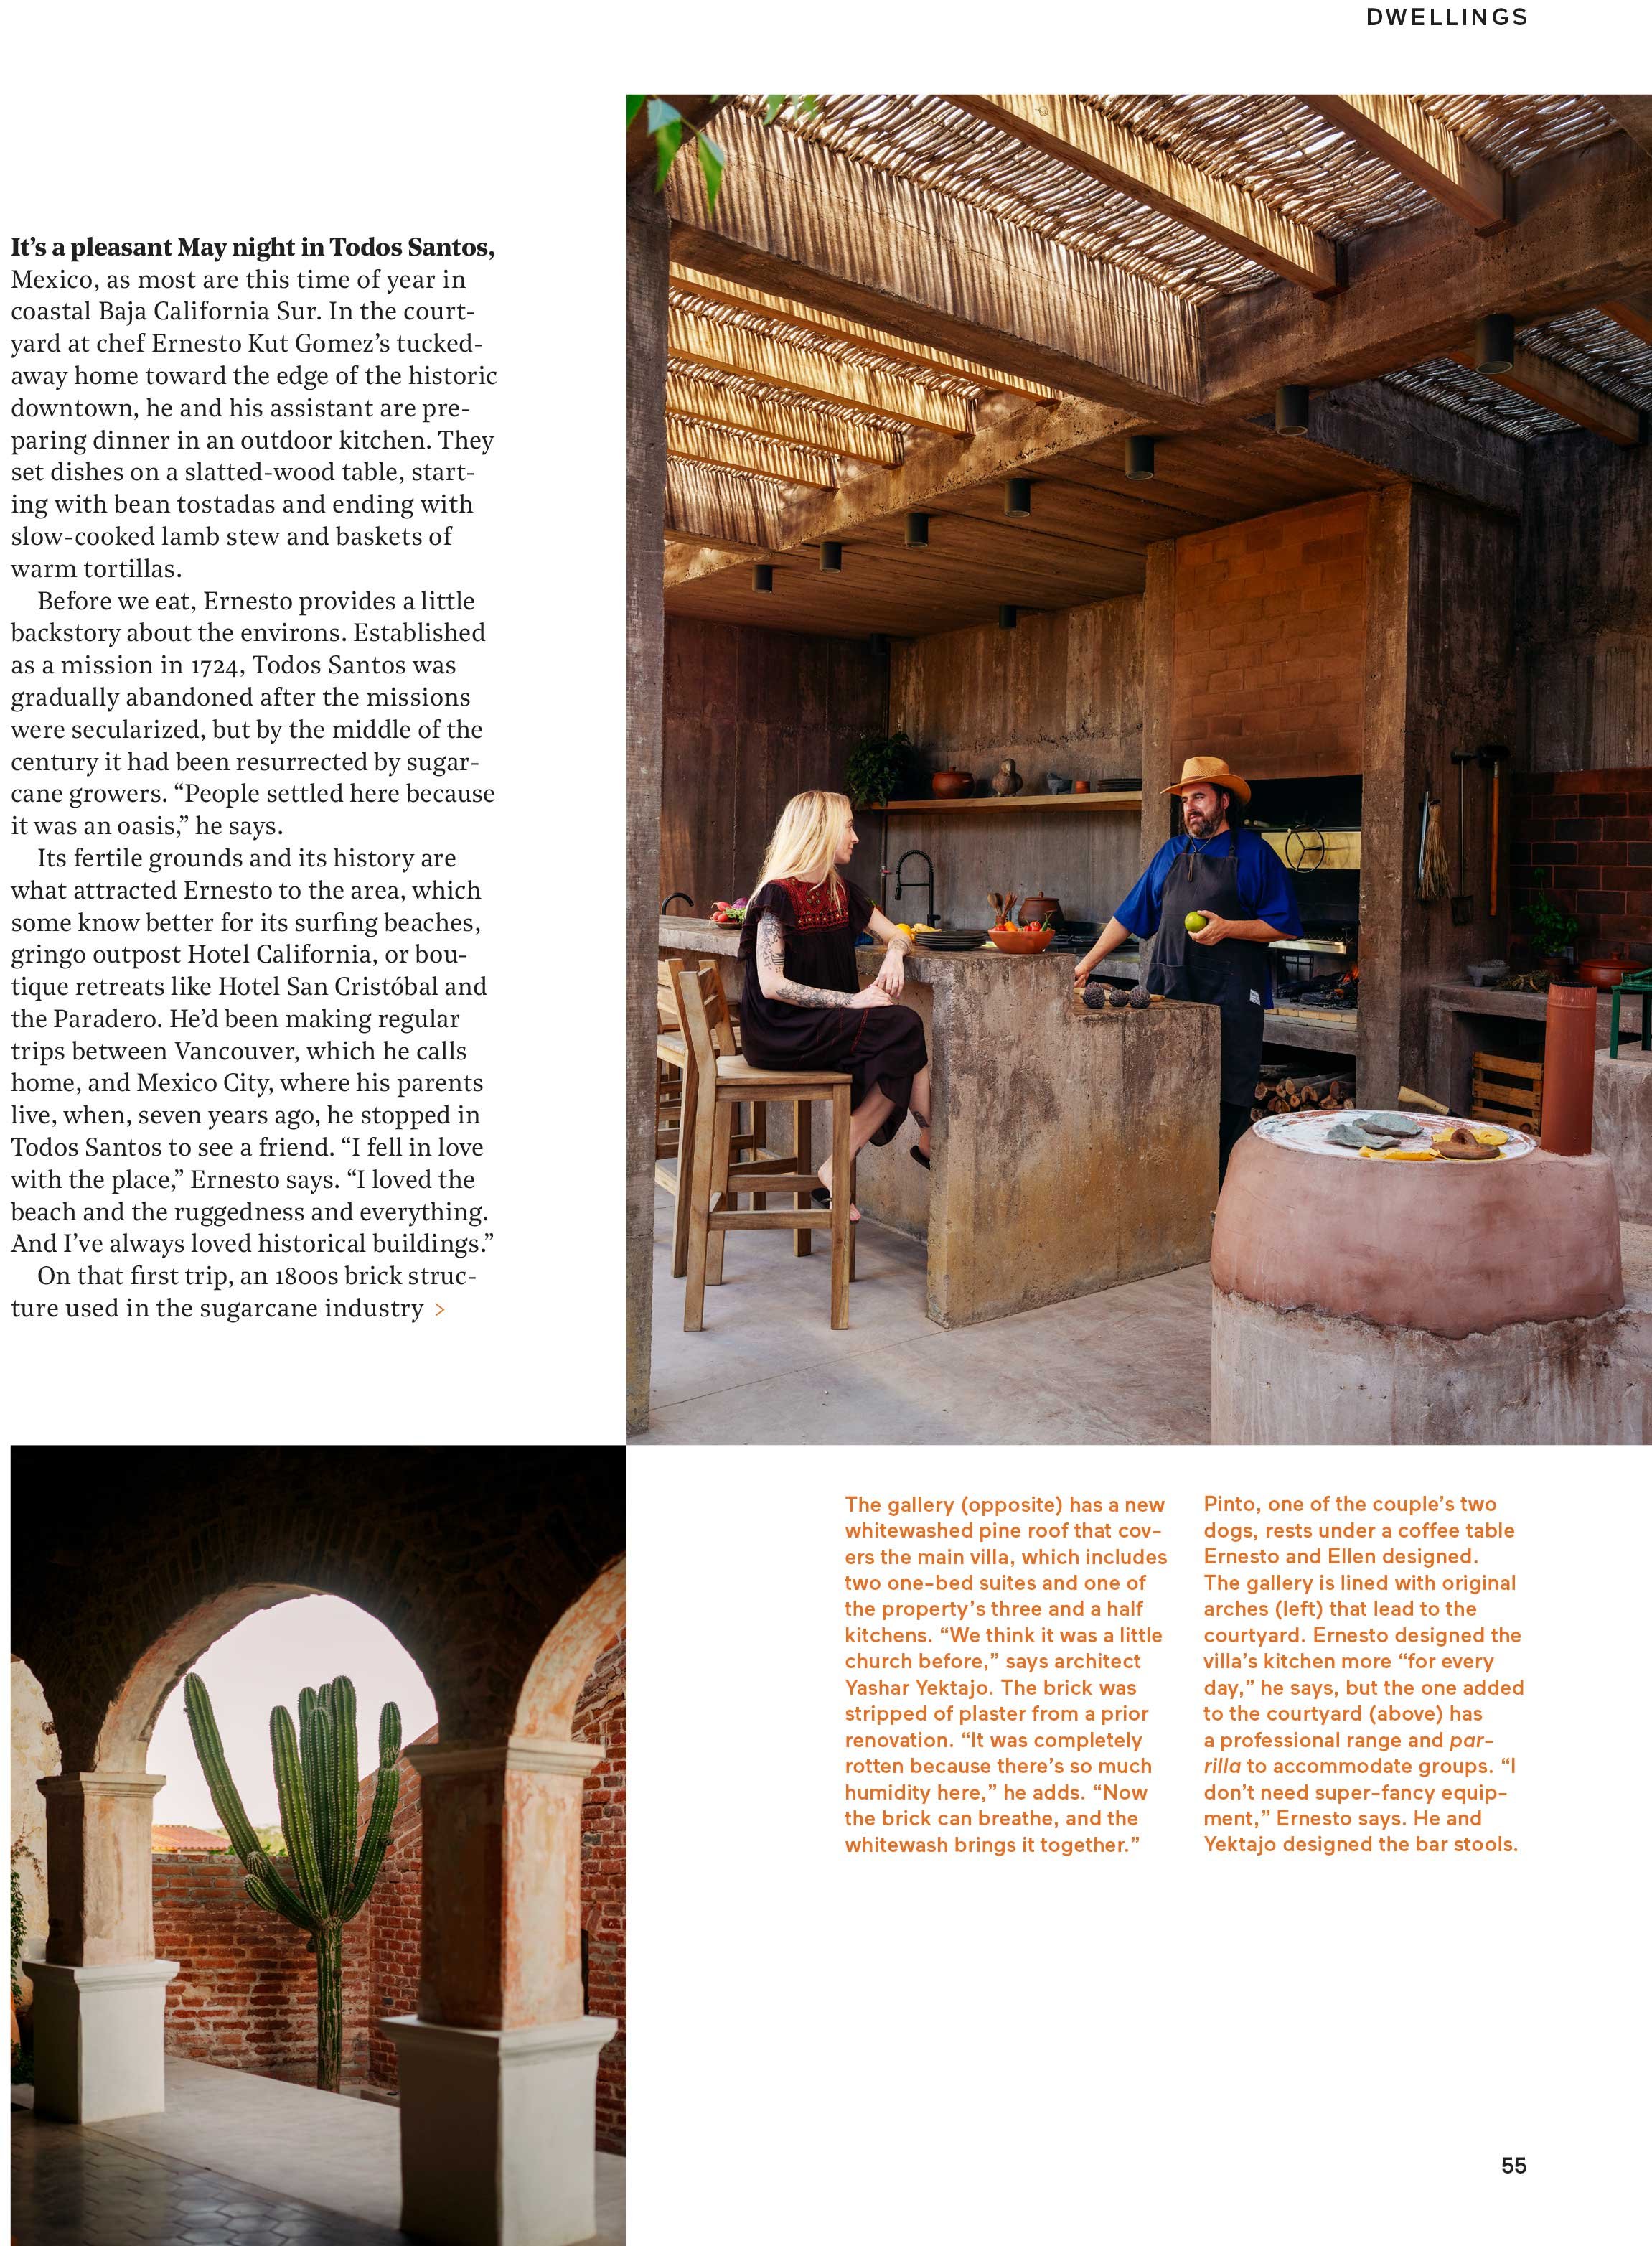 Casa-Melina---Dwell-Magazine-5.jpg